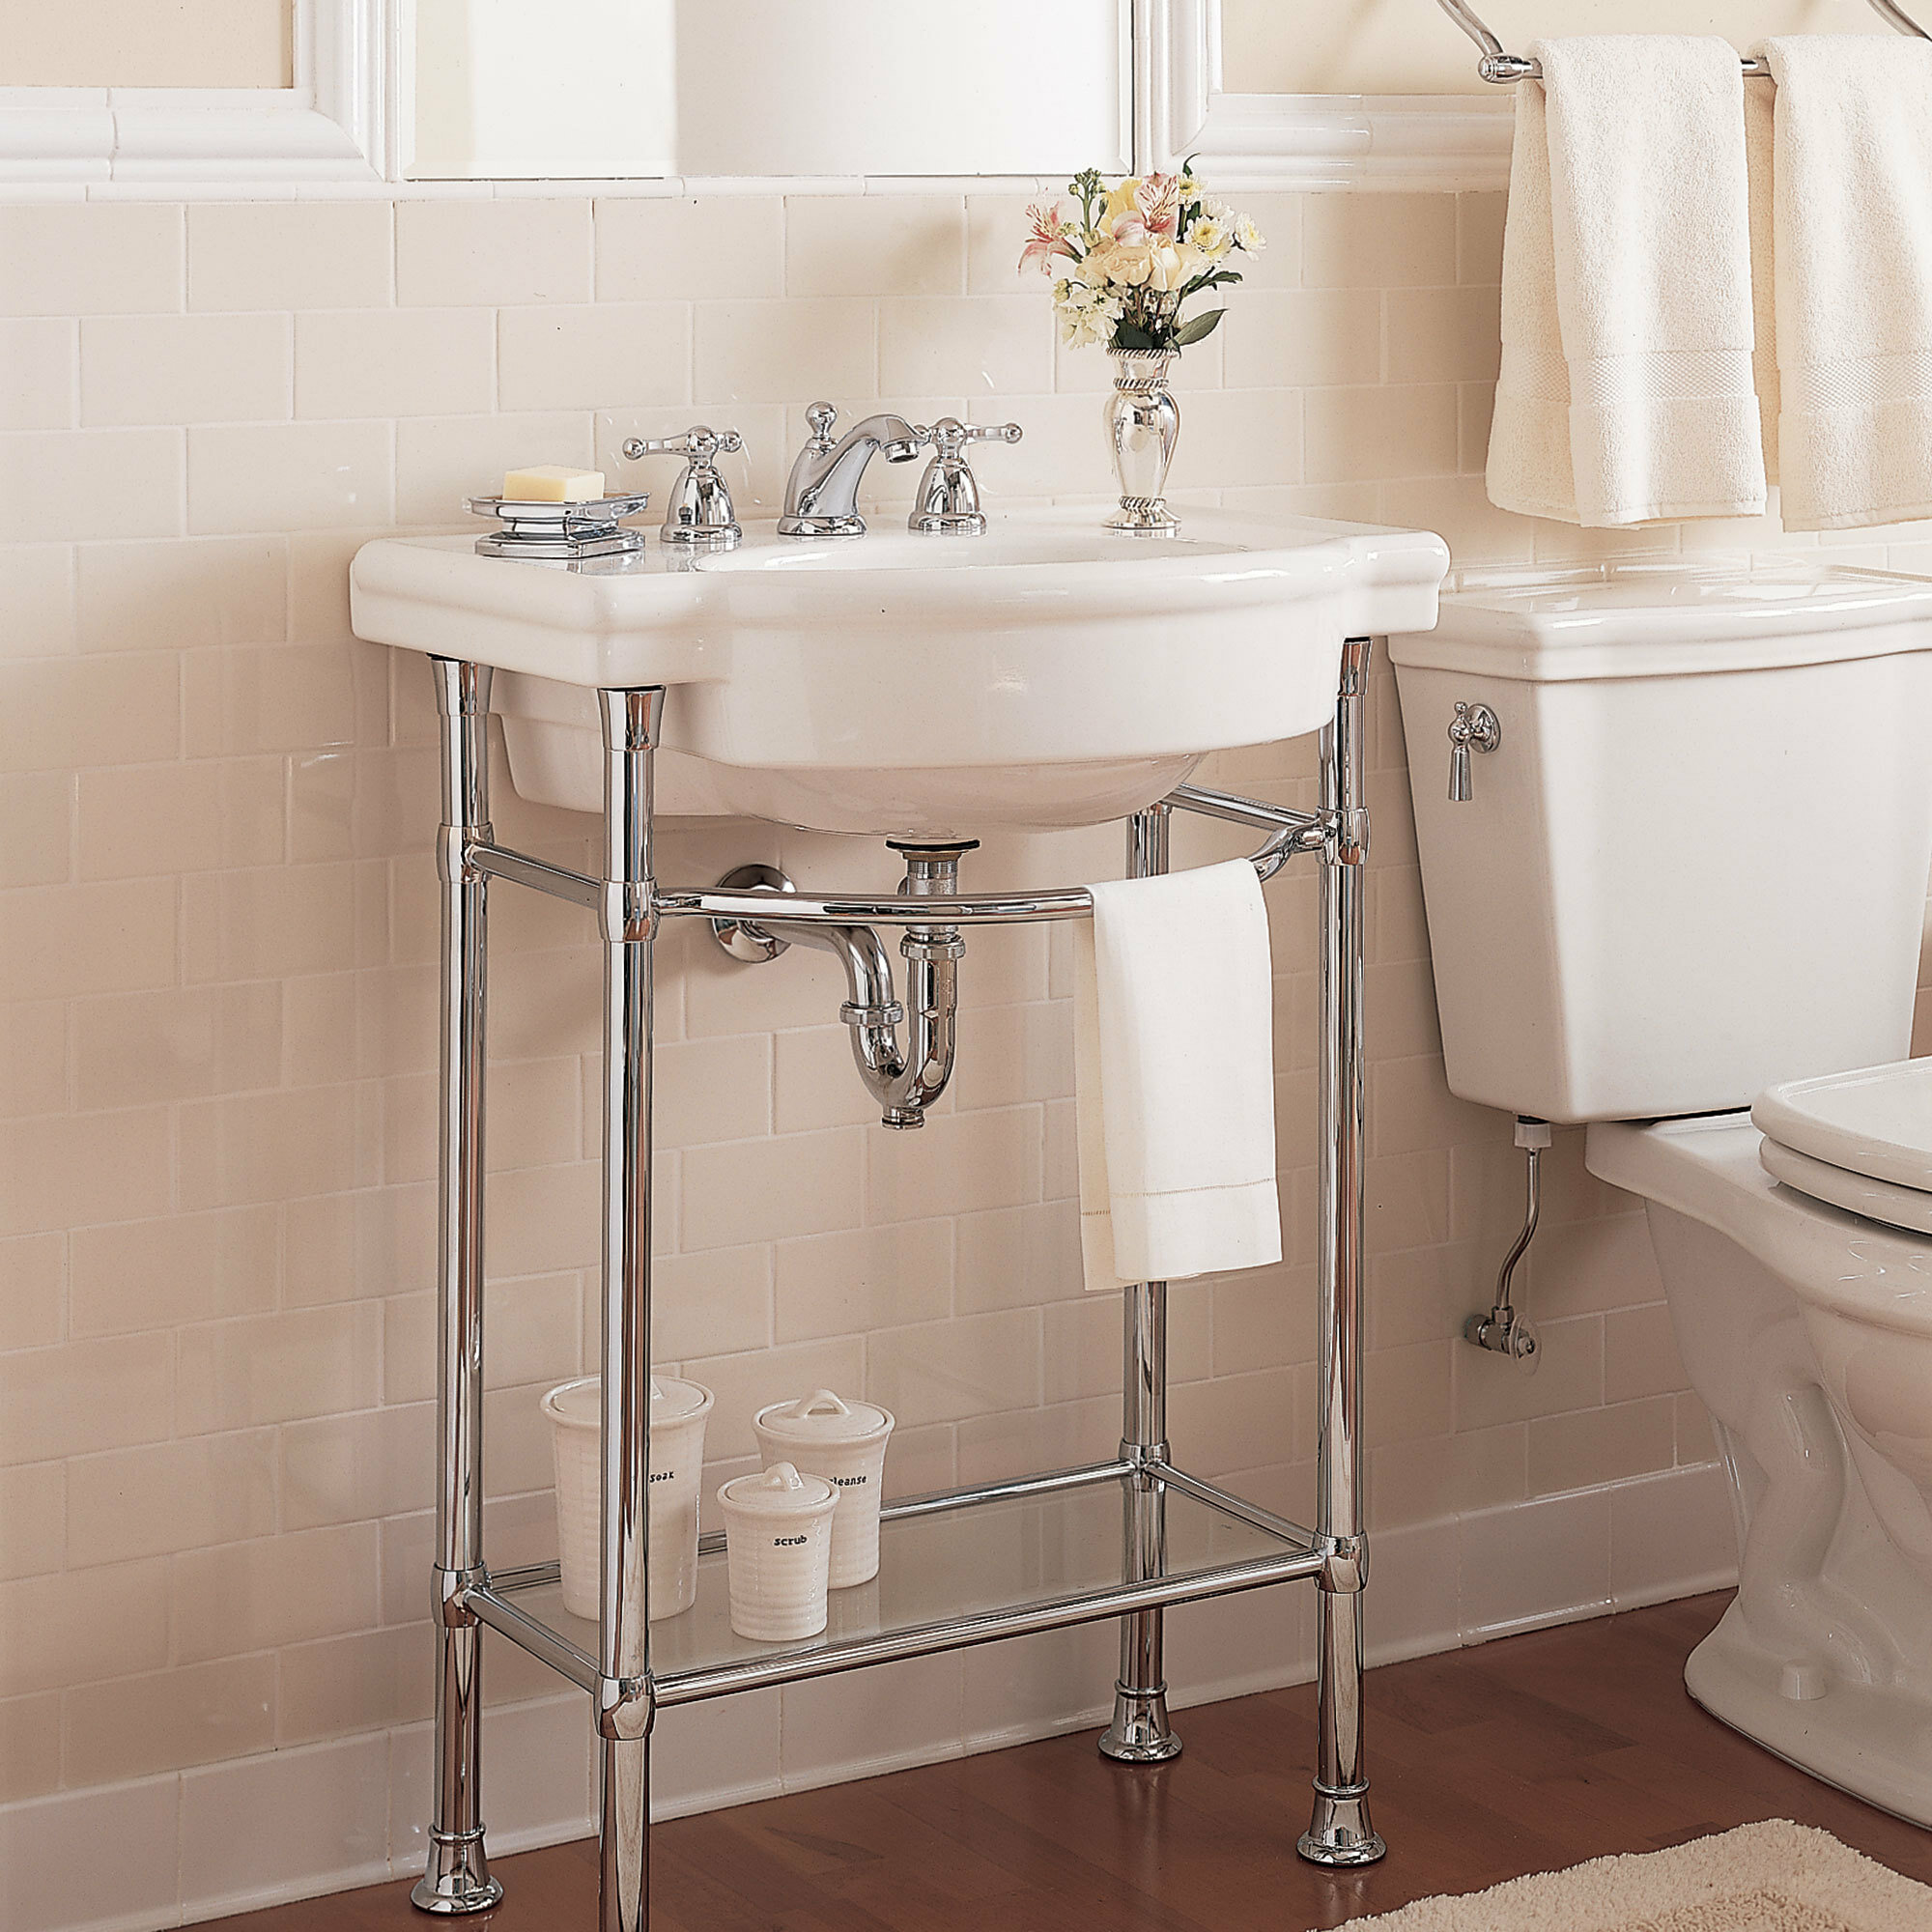 American Standard Retrospect Ceramic Specialty Console Bathroom Sink With Overflow Reviews Wayfair